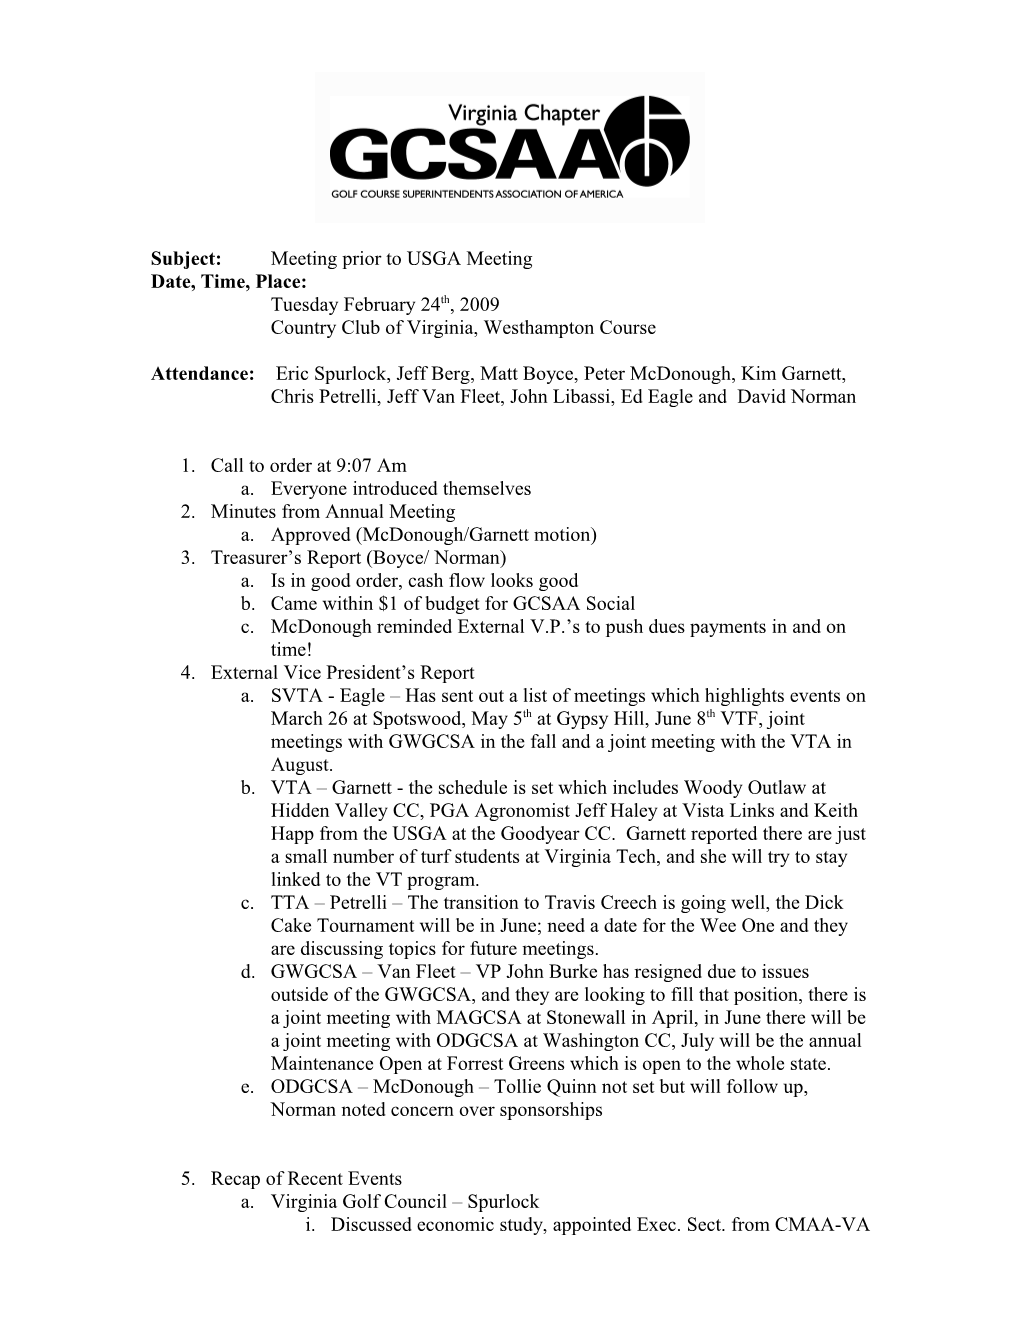 Subject:Meeting Prior to USGA Meeting